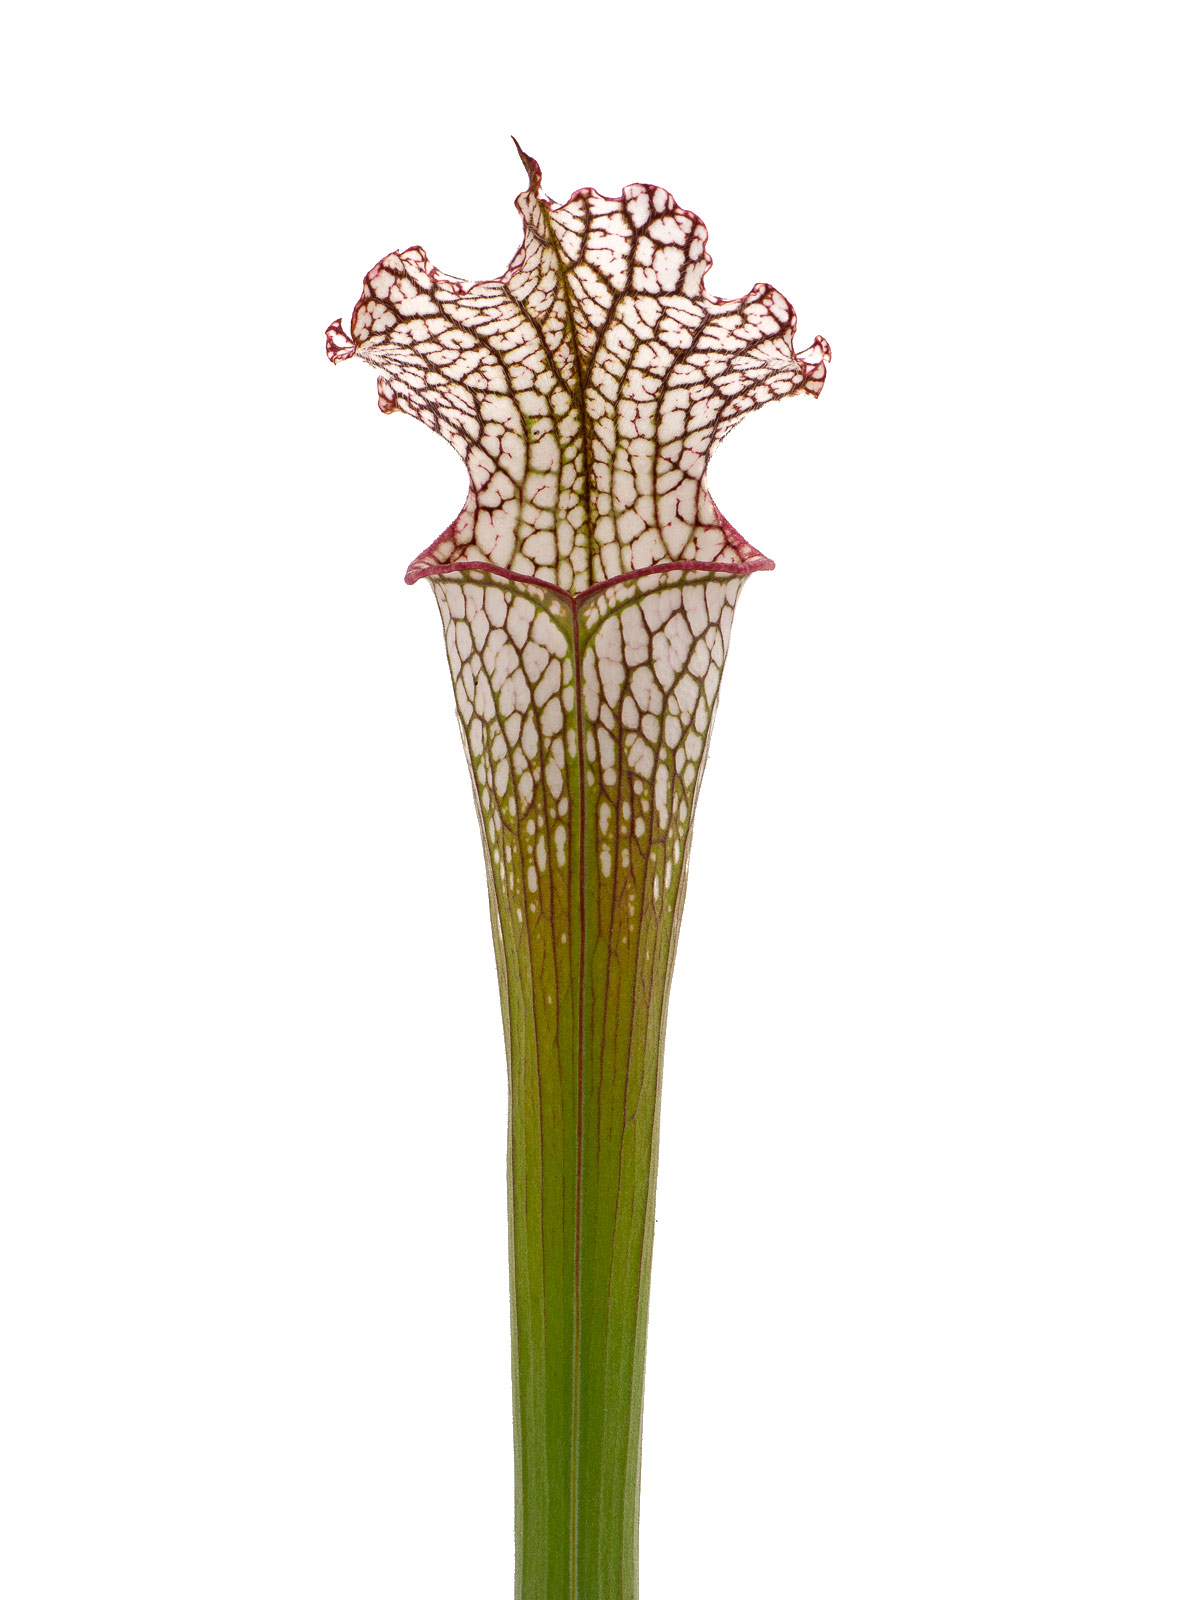 S. leucophylla - pubescent form, Joachim Jung